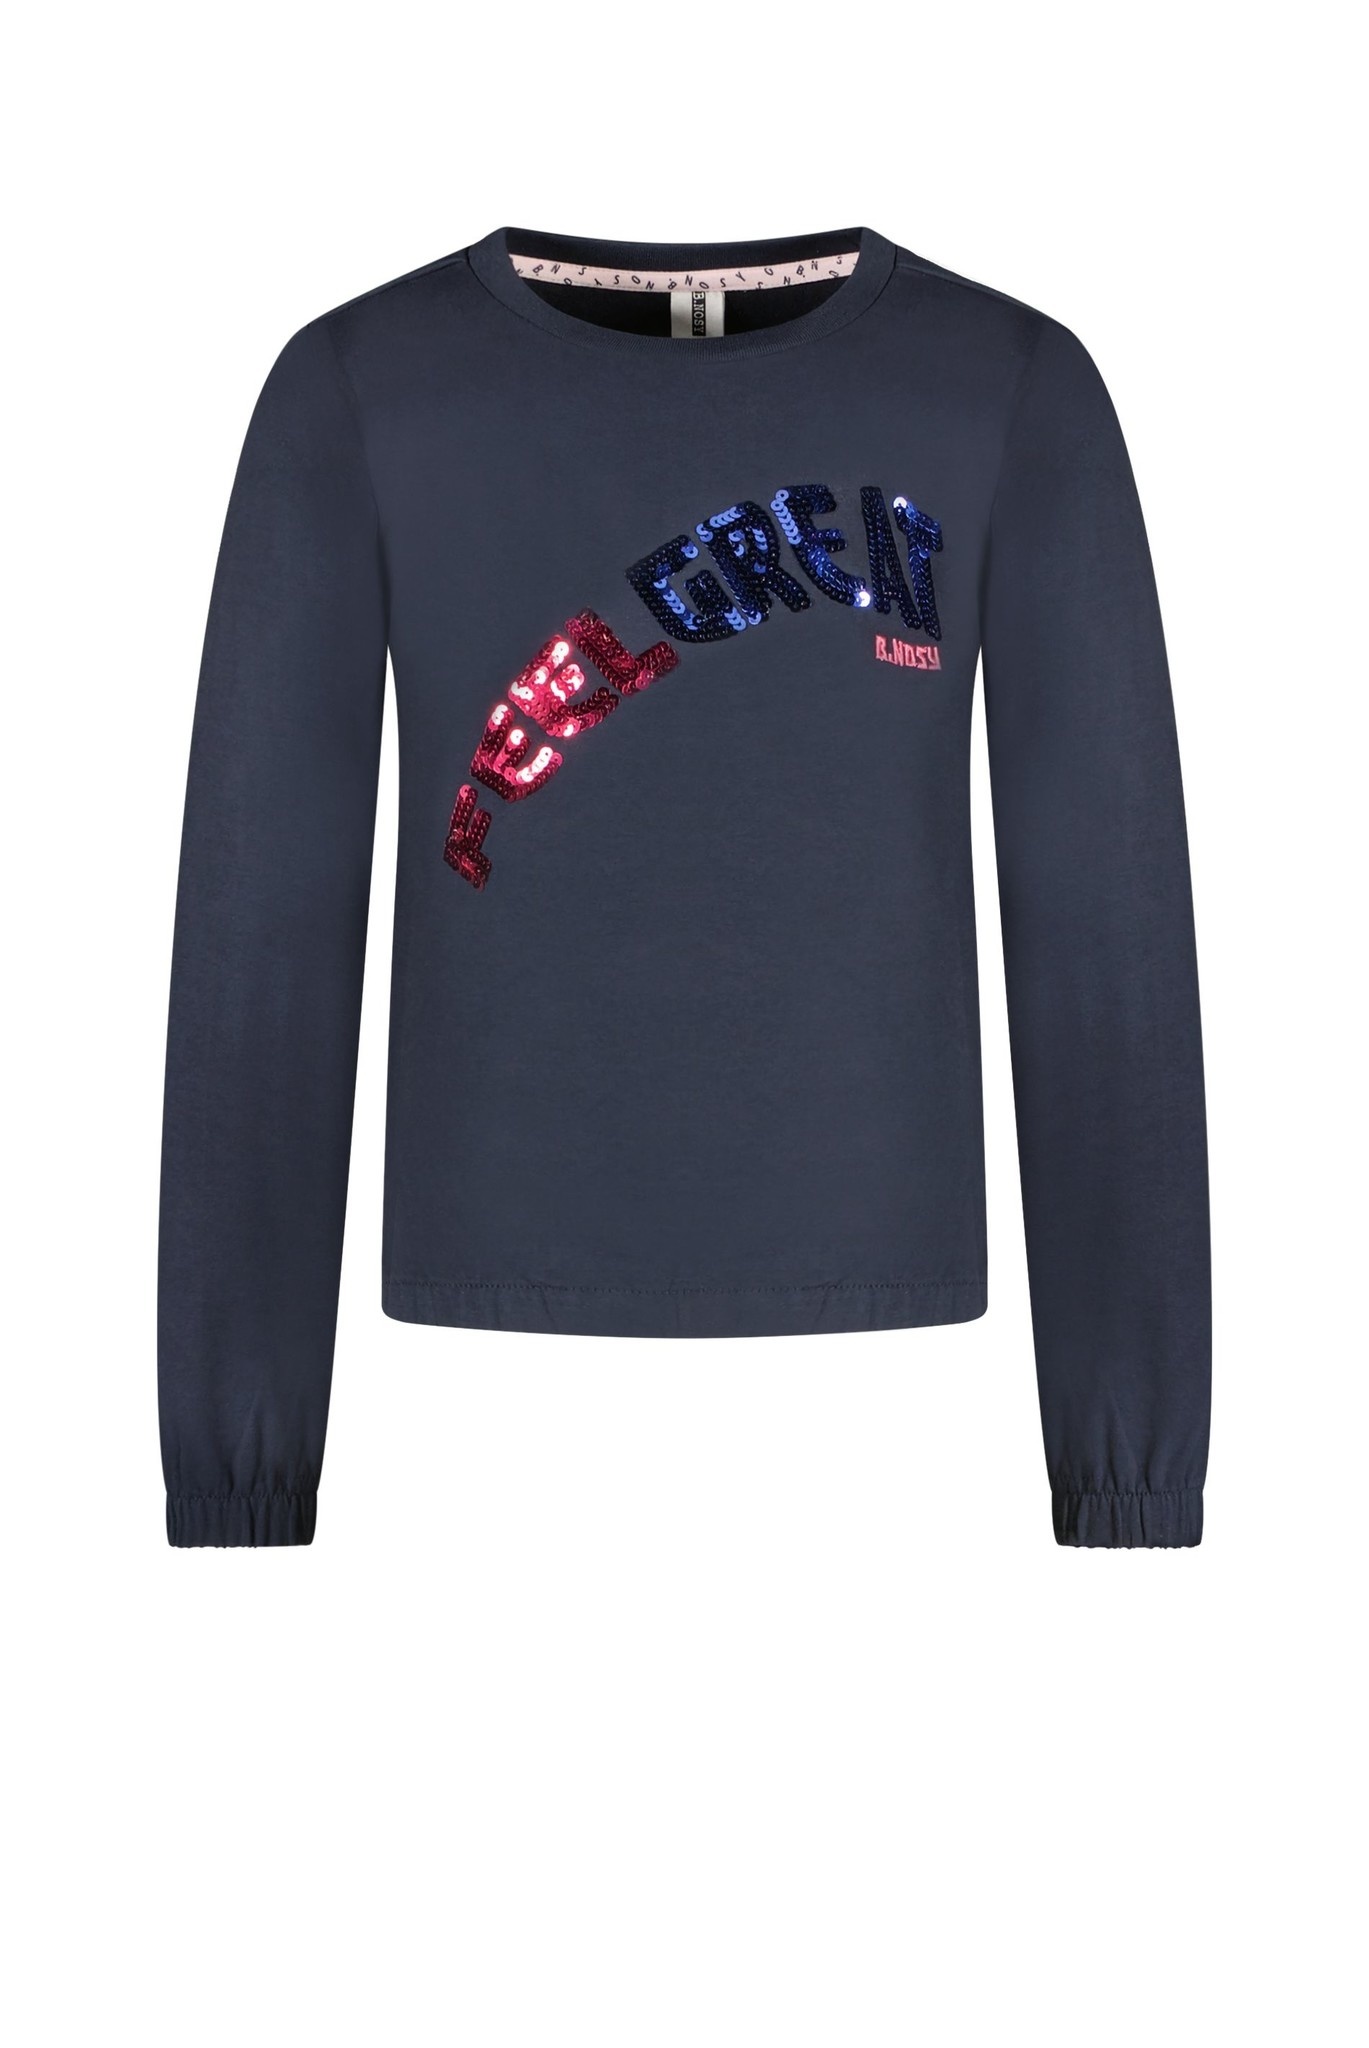 B.Nosy Meisjes sweater artwork - Navy blauw